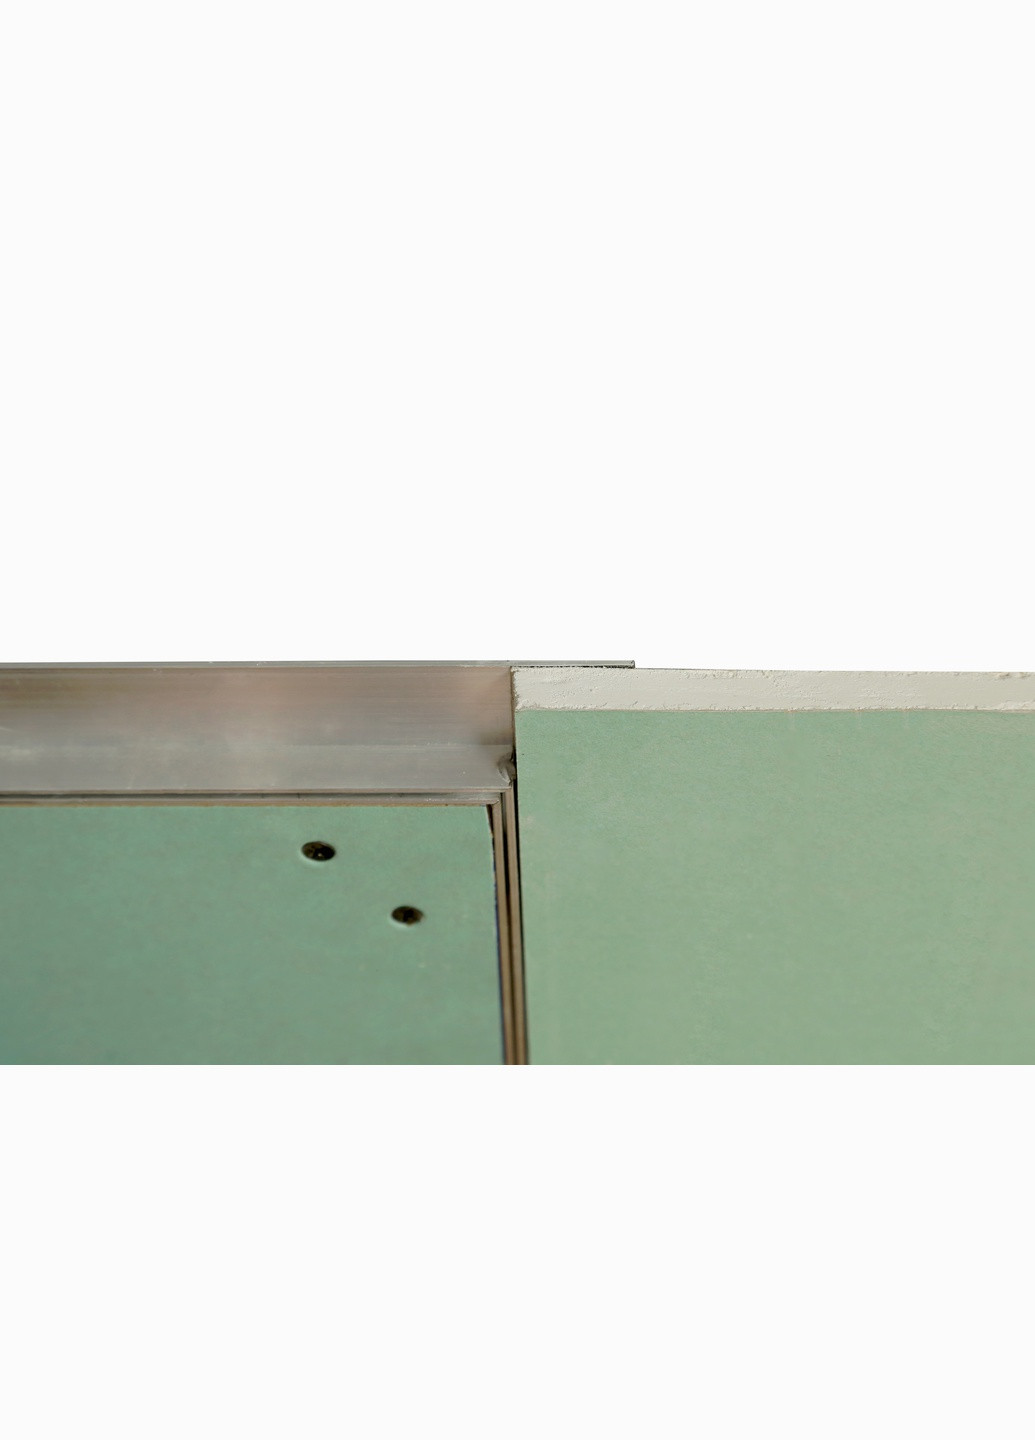 Ревизионный люк скрытого монтажа под покраску (поклейку обоев) типа СТАНДАРТ 500x900 (1409) S-Dom (264208746)